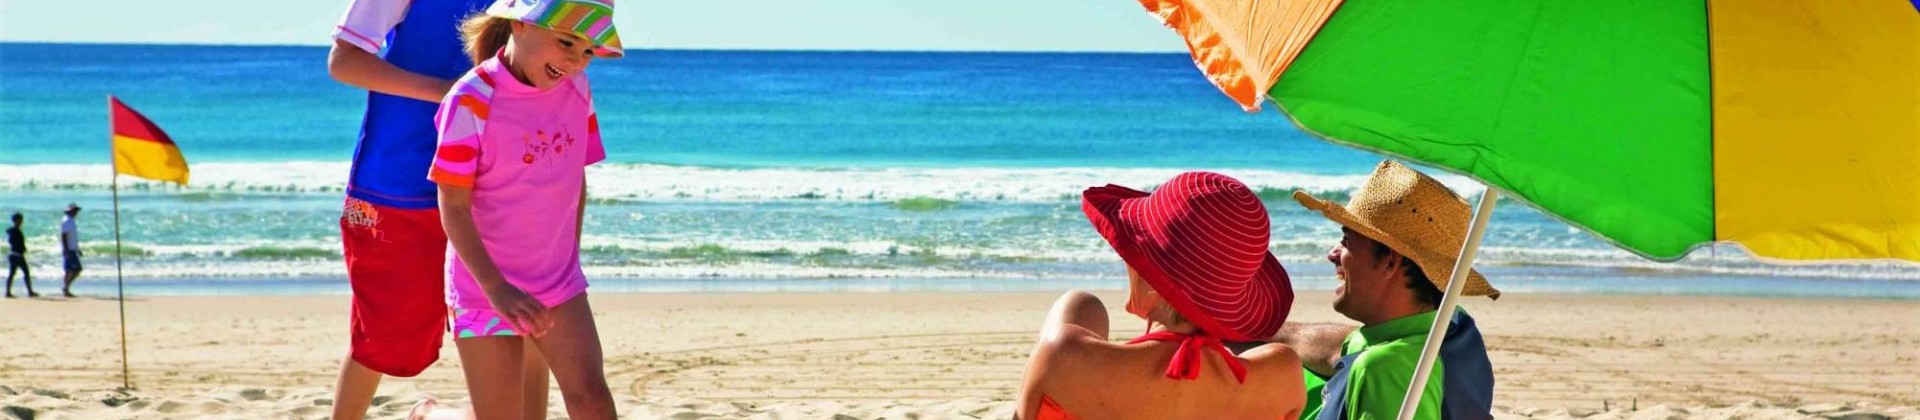 On the Gold Coast, Australia's Premier Holiday Destination